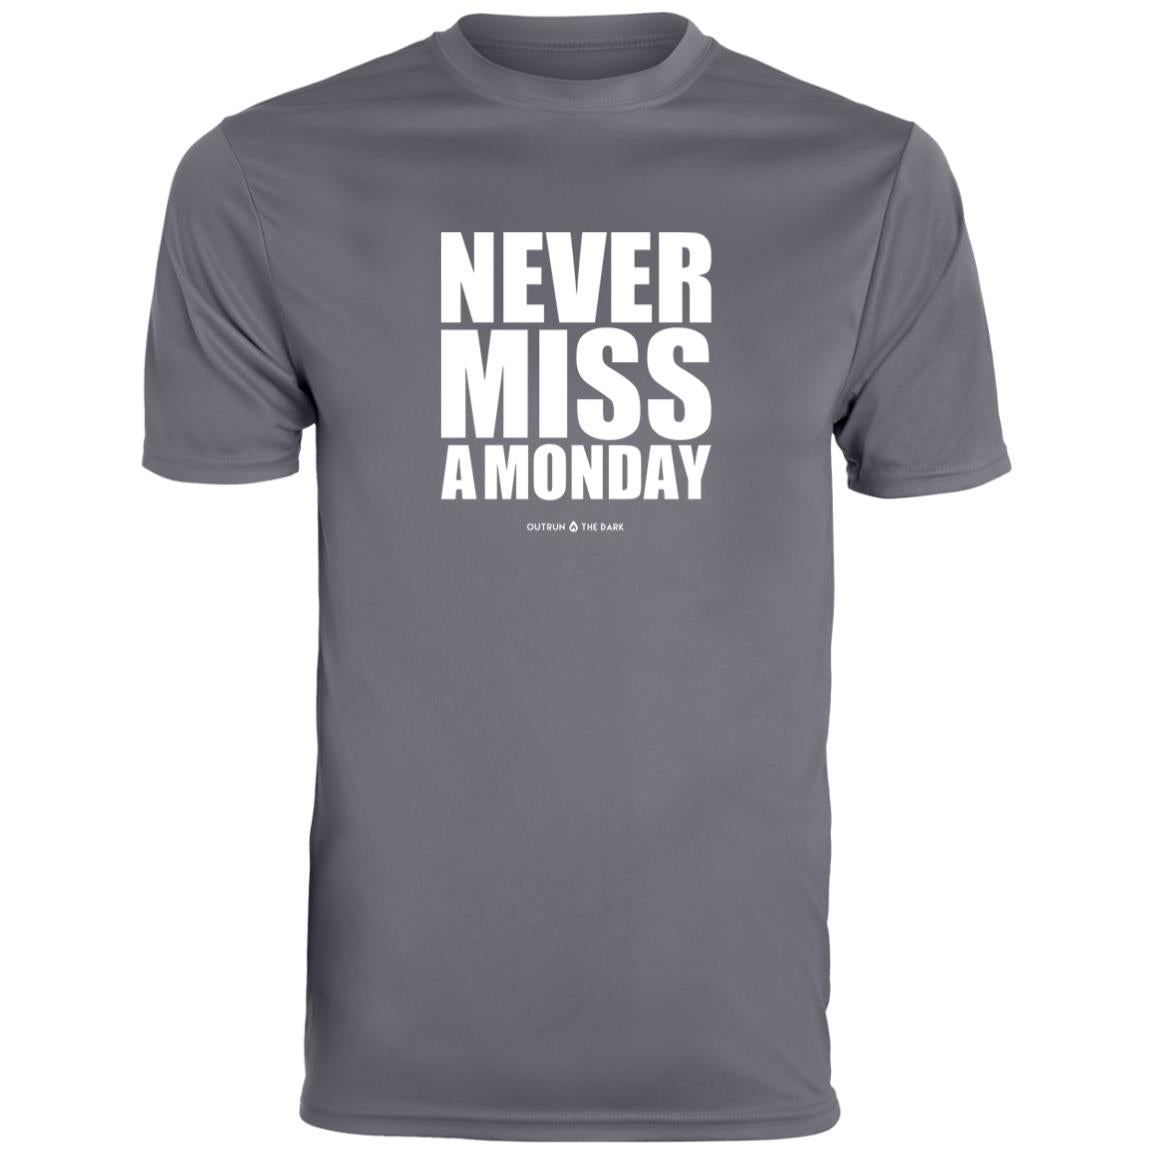 NEVER MISS A MONDAY Men's Performance T-Shirt